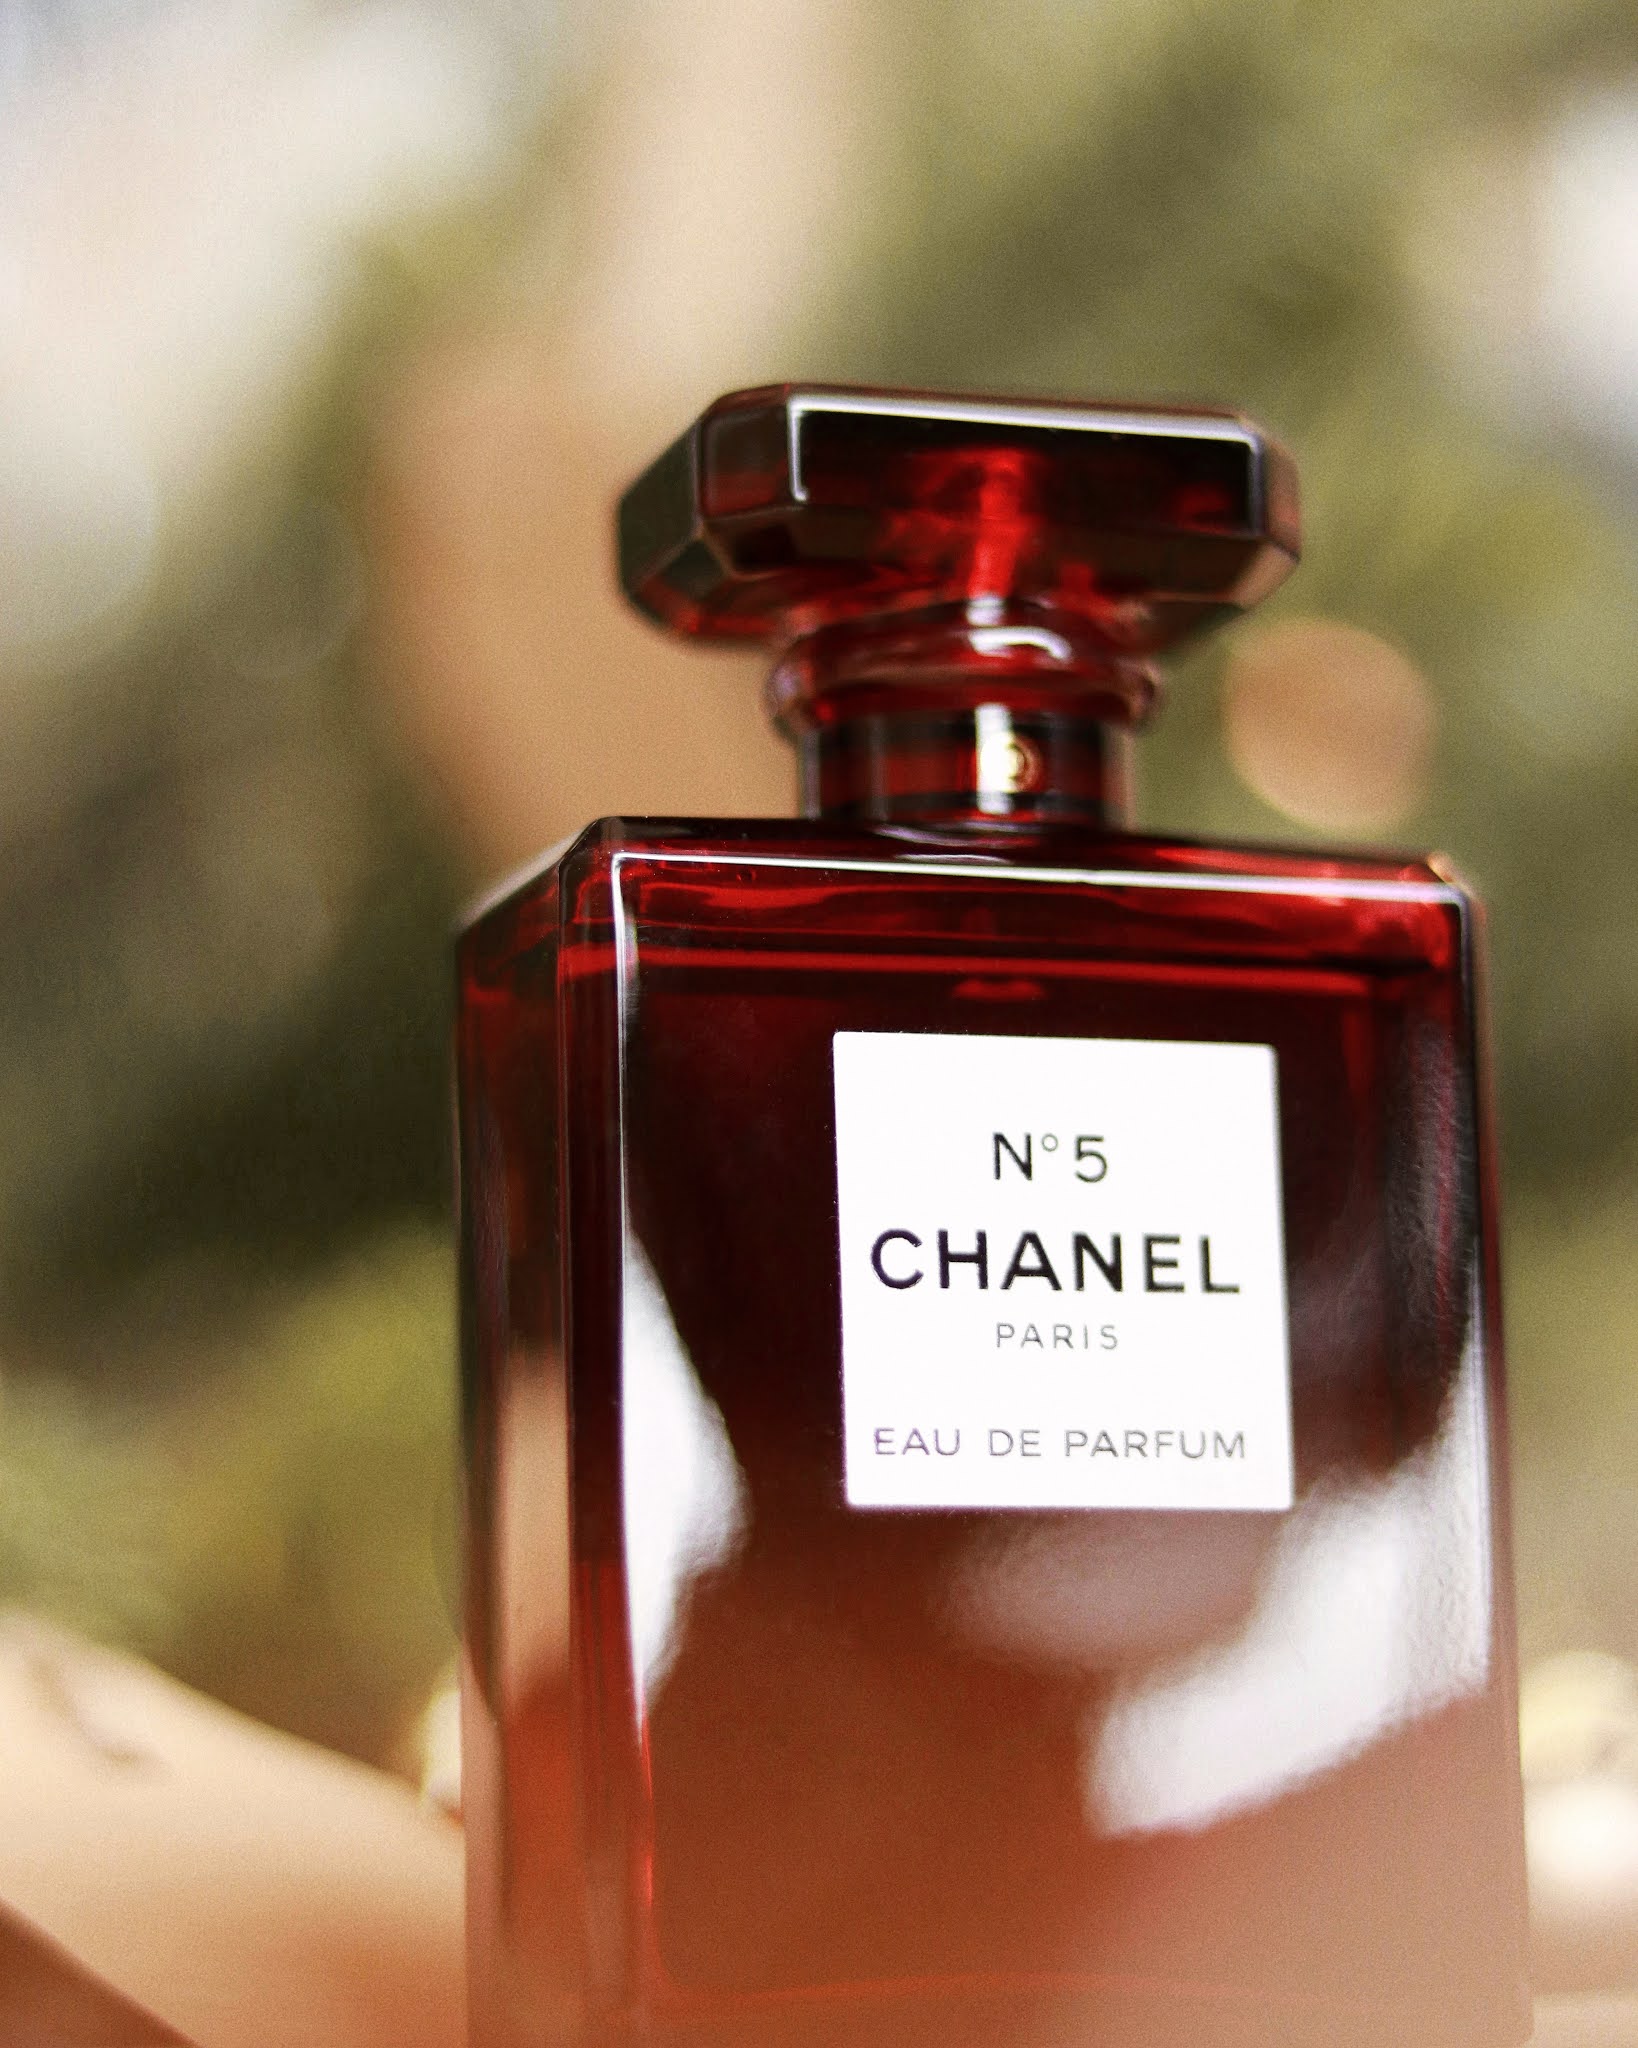 Chanel No 5 Eau de Parfum Red Edition Chanel perfume - a fragrance